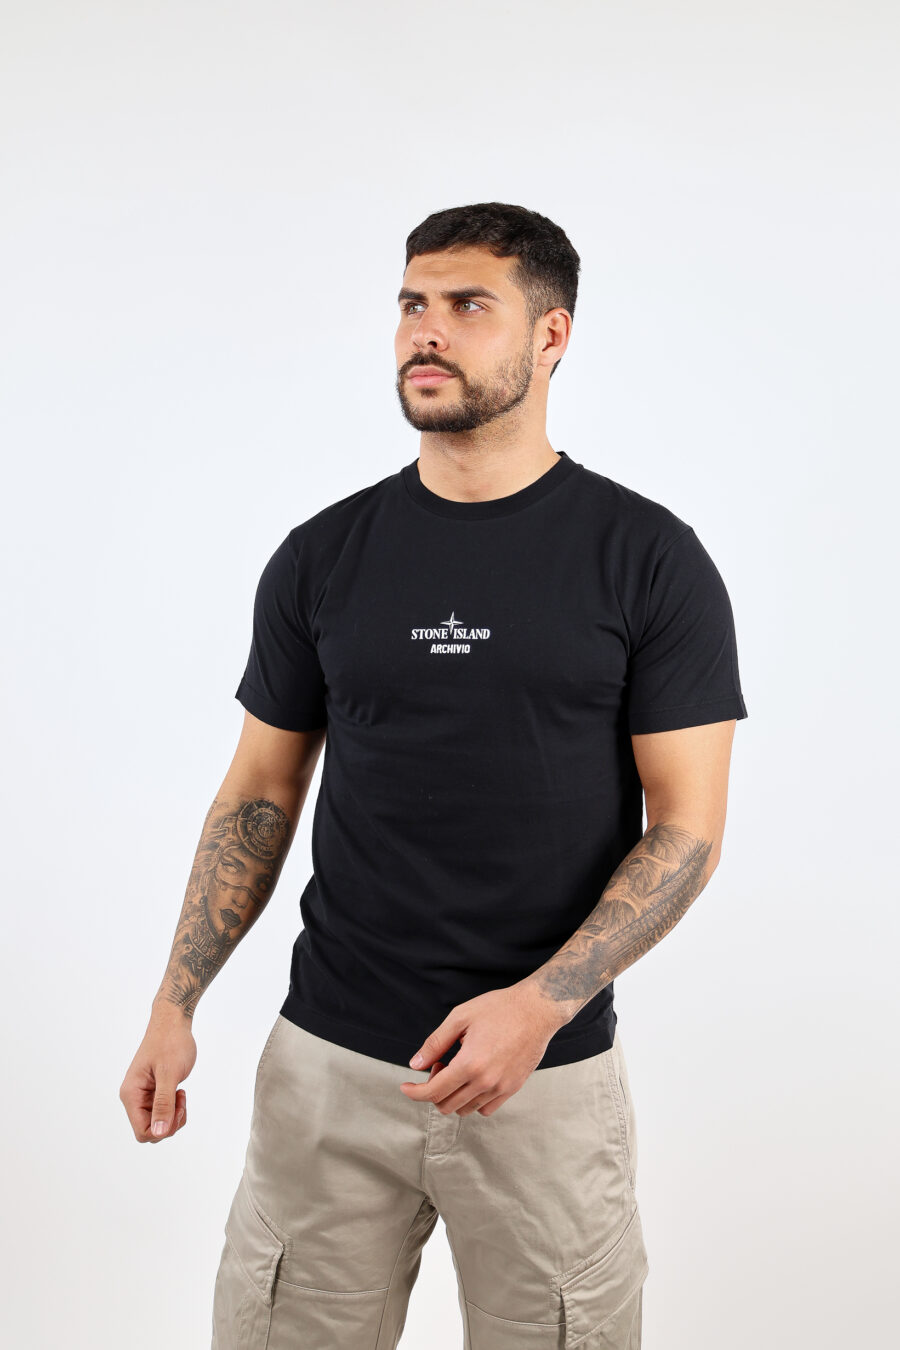 Camiseta negra con minilogo "archivio" centrado - BLS Fashion 152